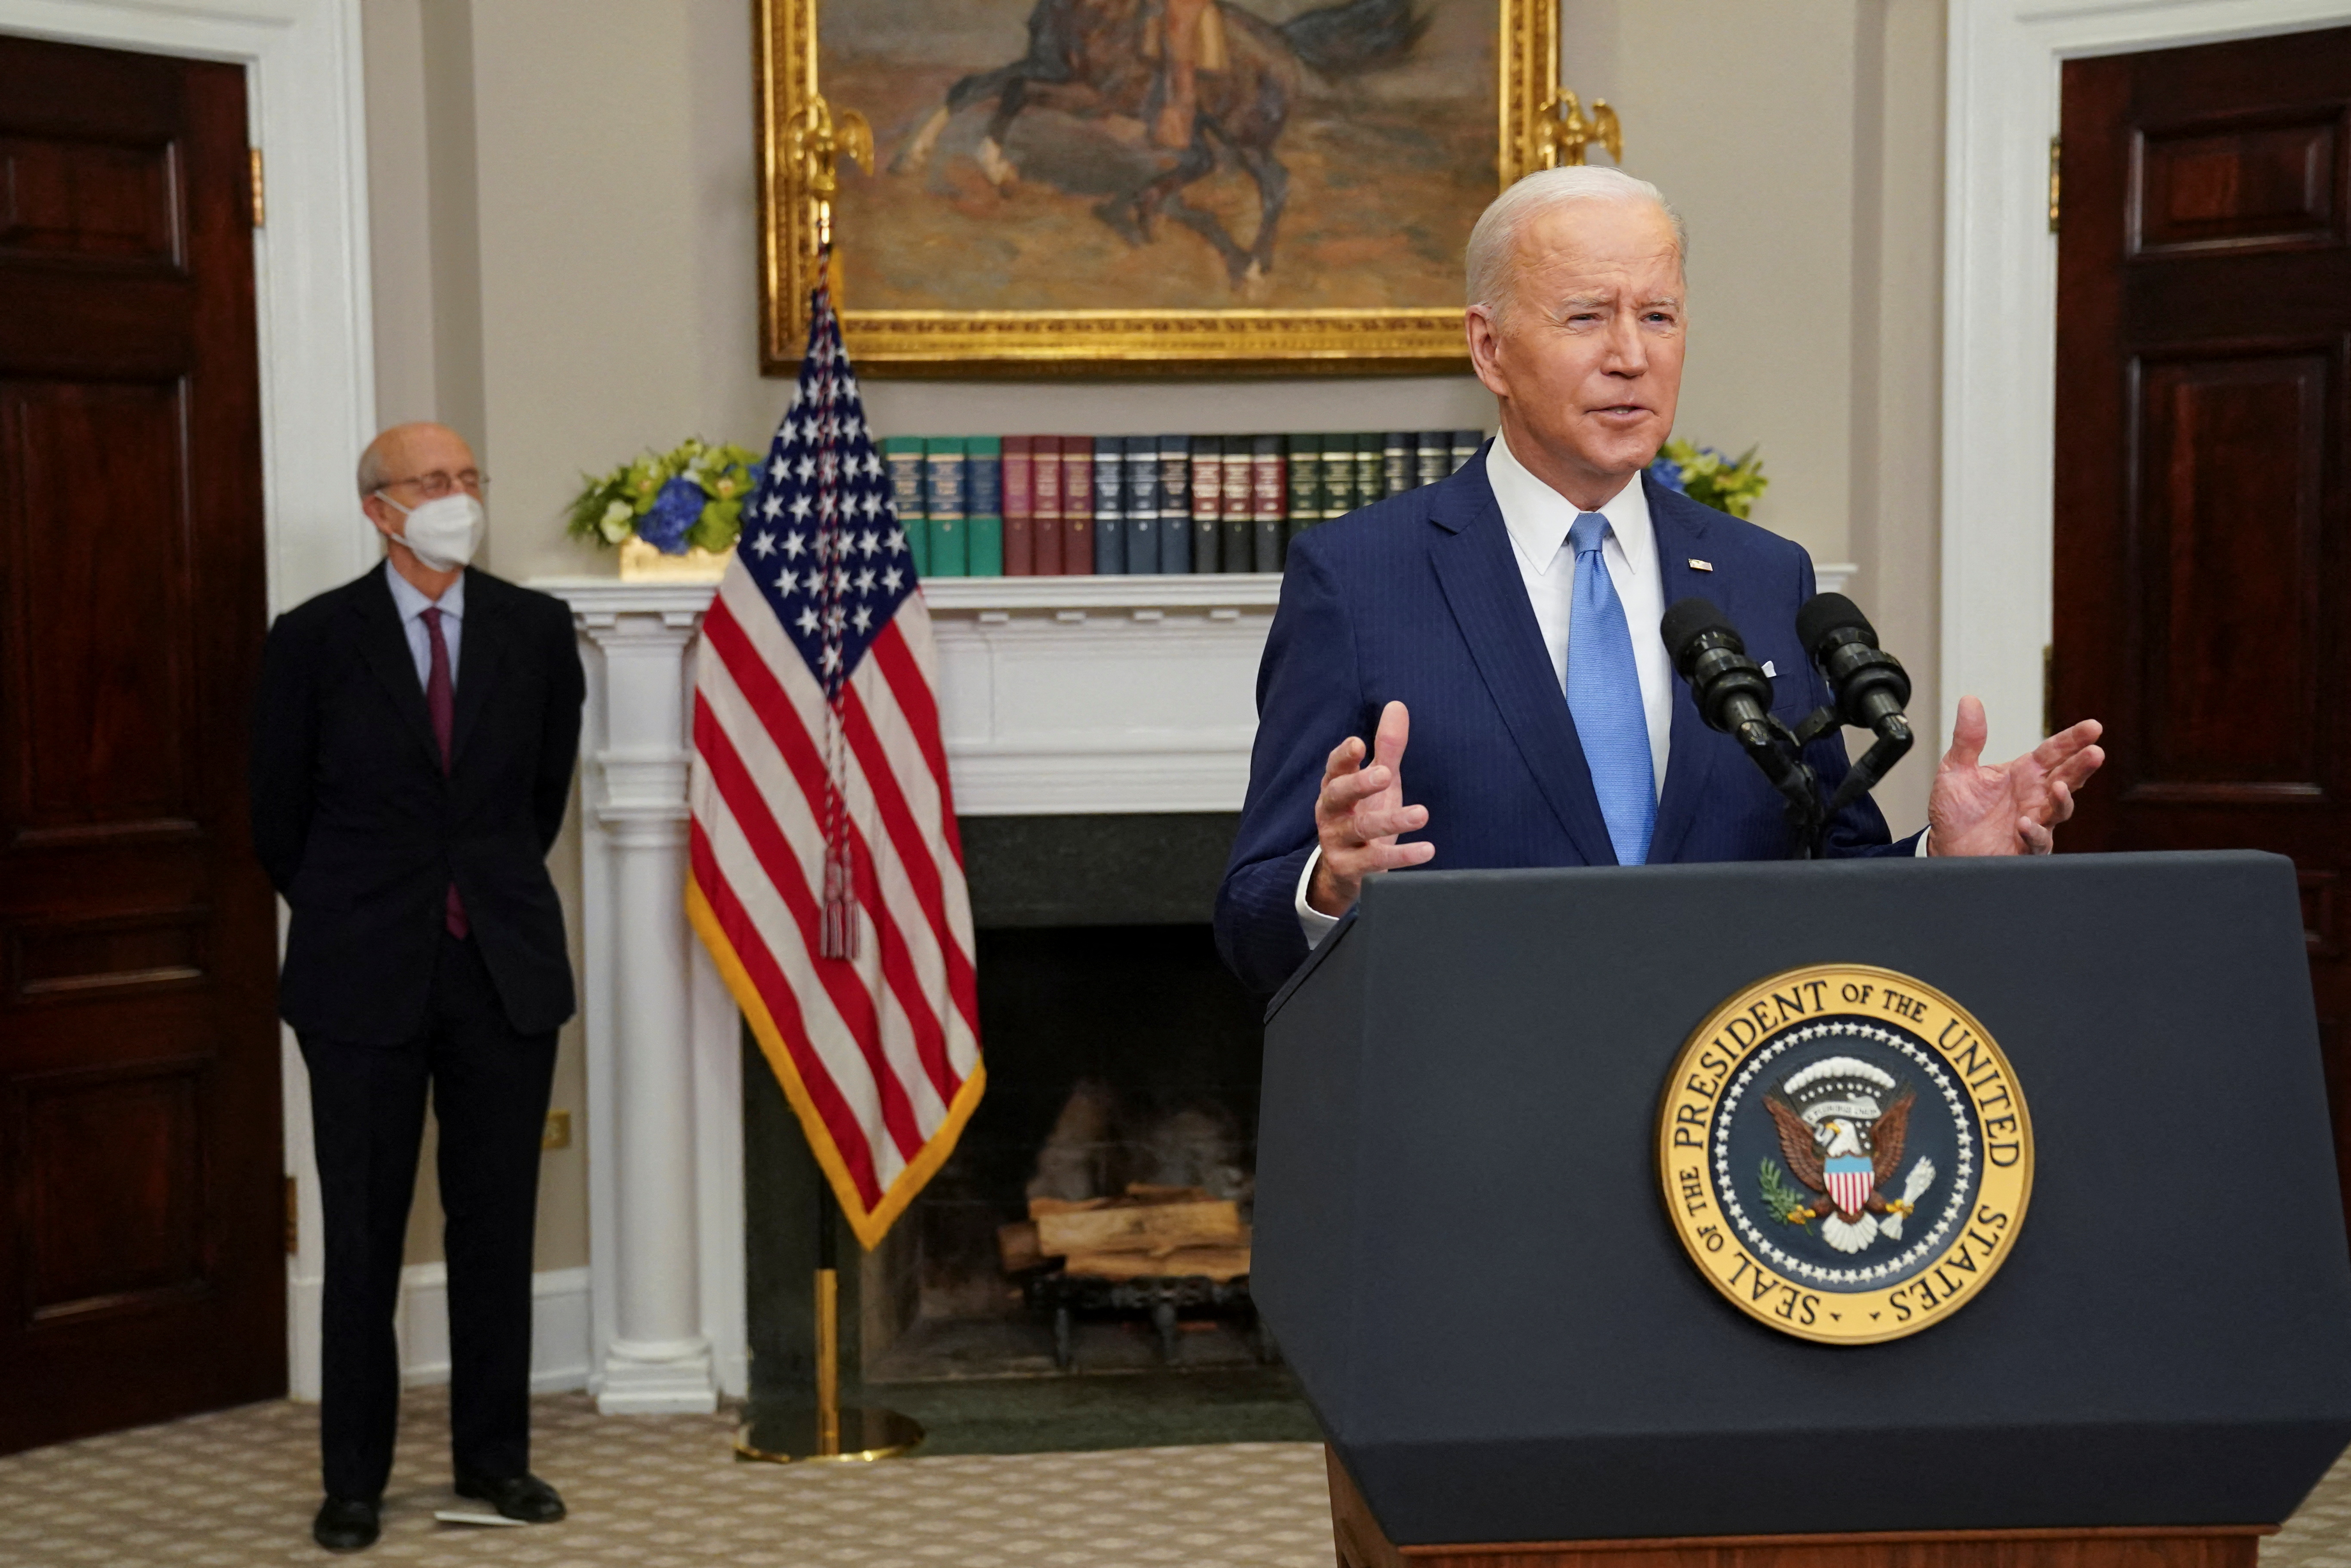 U.S. President Joe Biden and Supreme Court Justice Stephen Breyer discuss Breyer's pending retirement at the White House in Washington